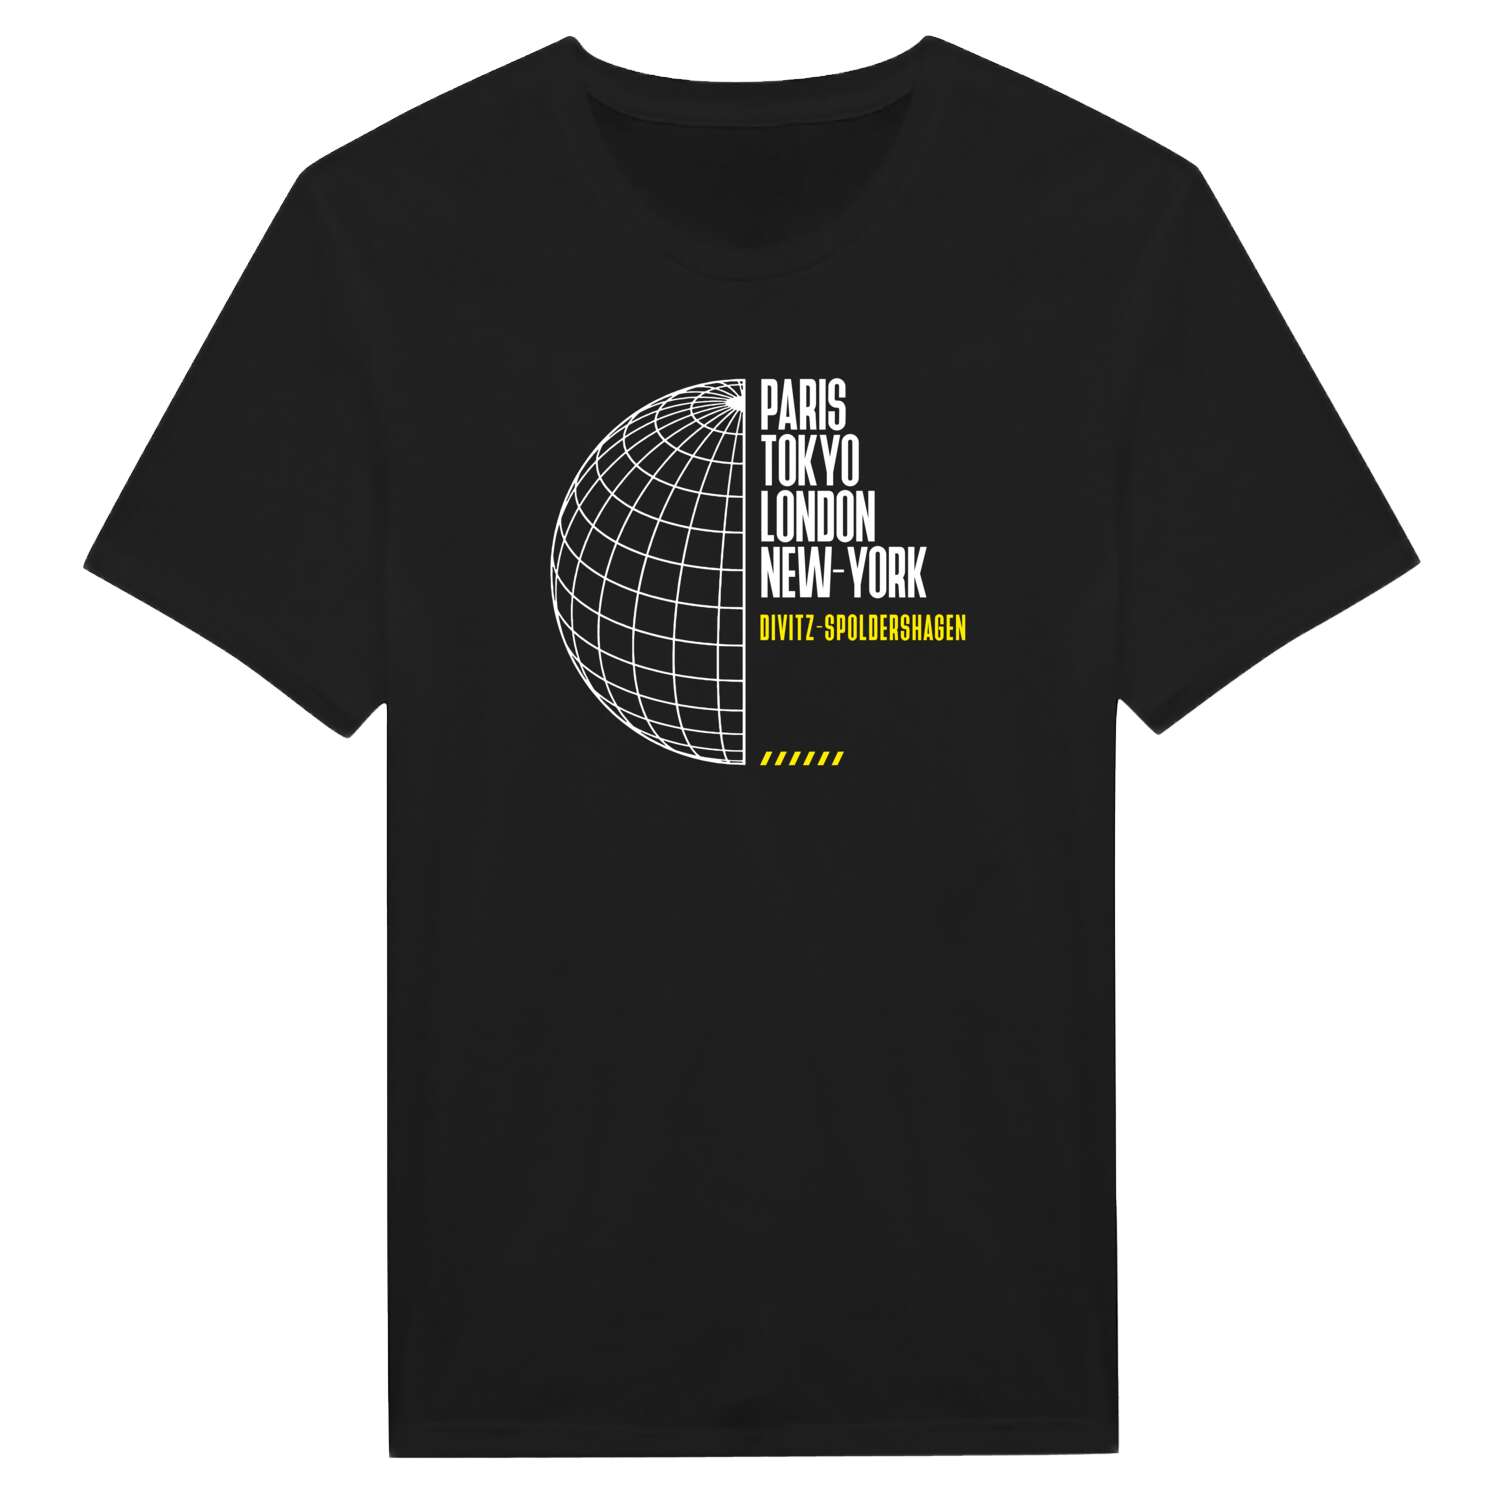 Divitz-Spoldershagen T-Shirt »Paris Tokyo London«